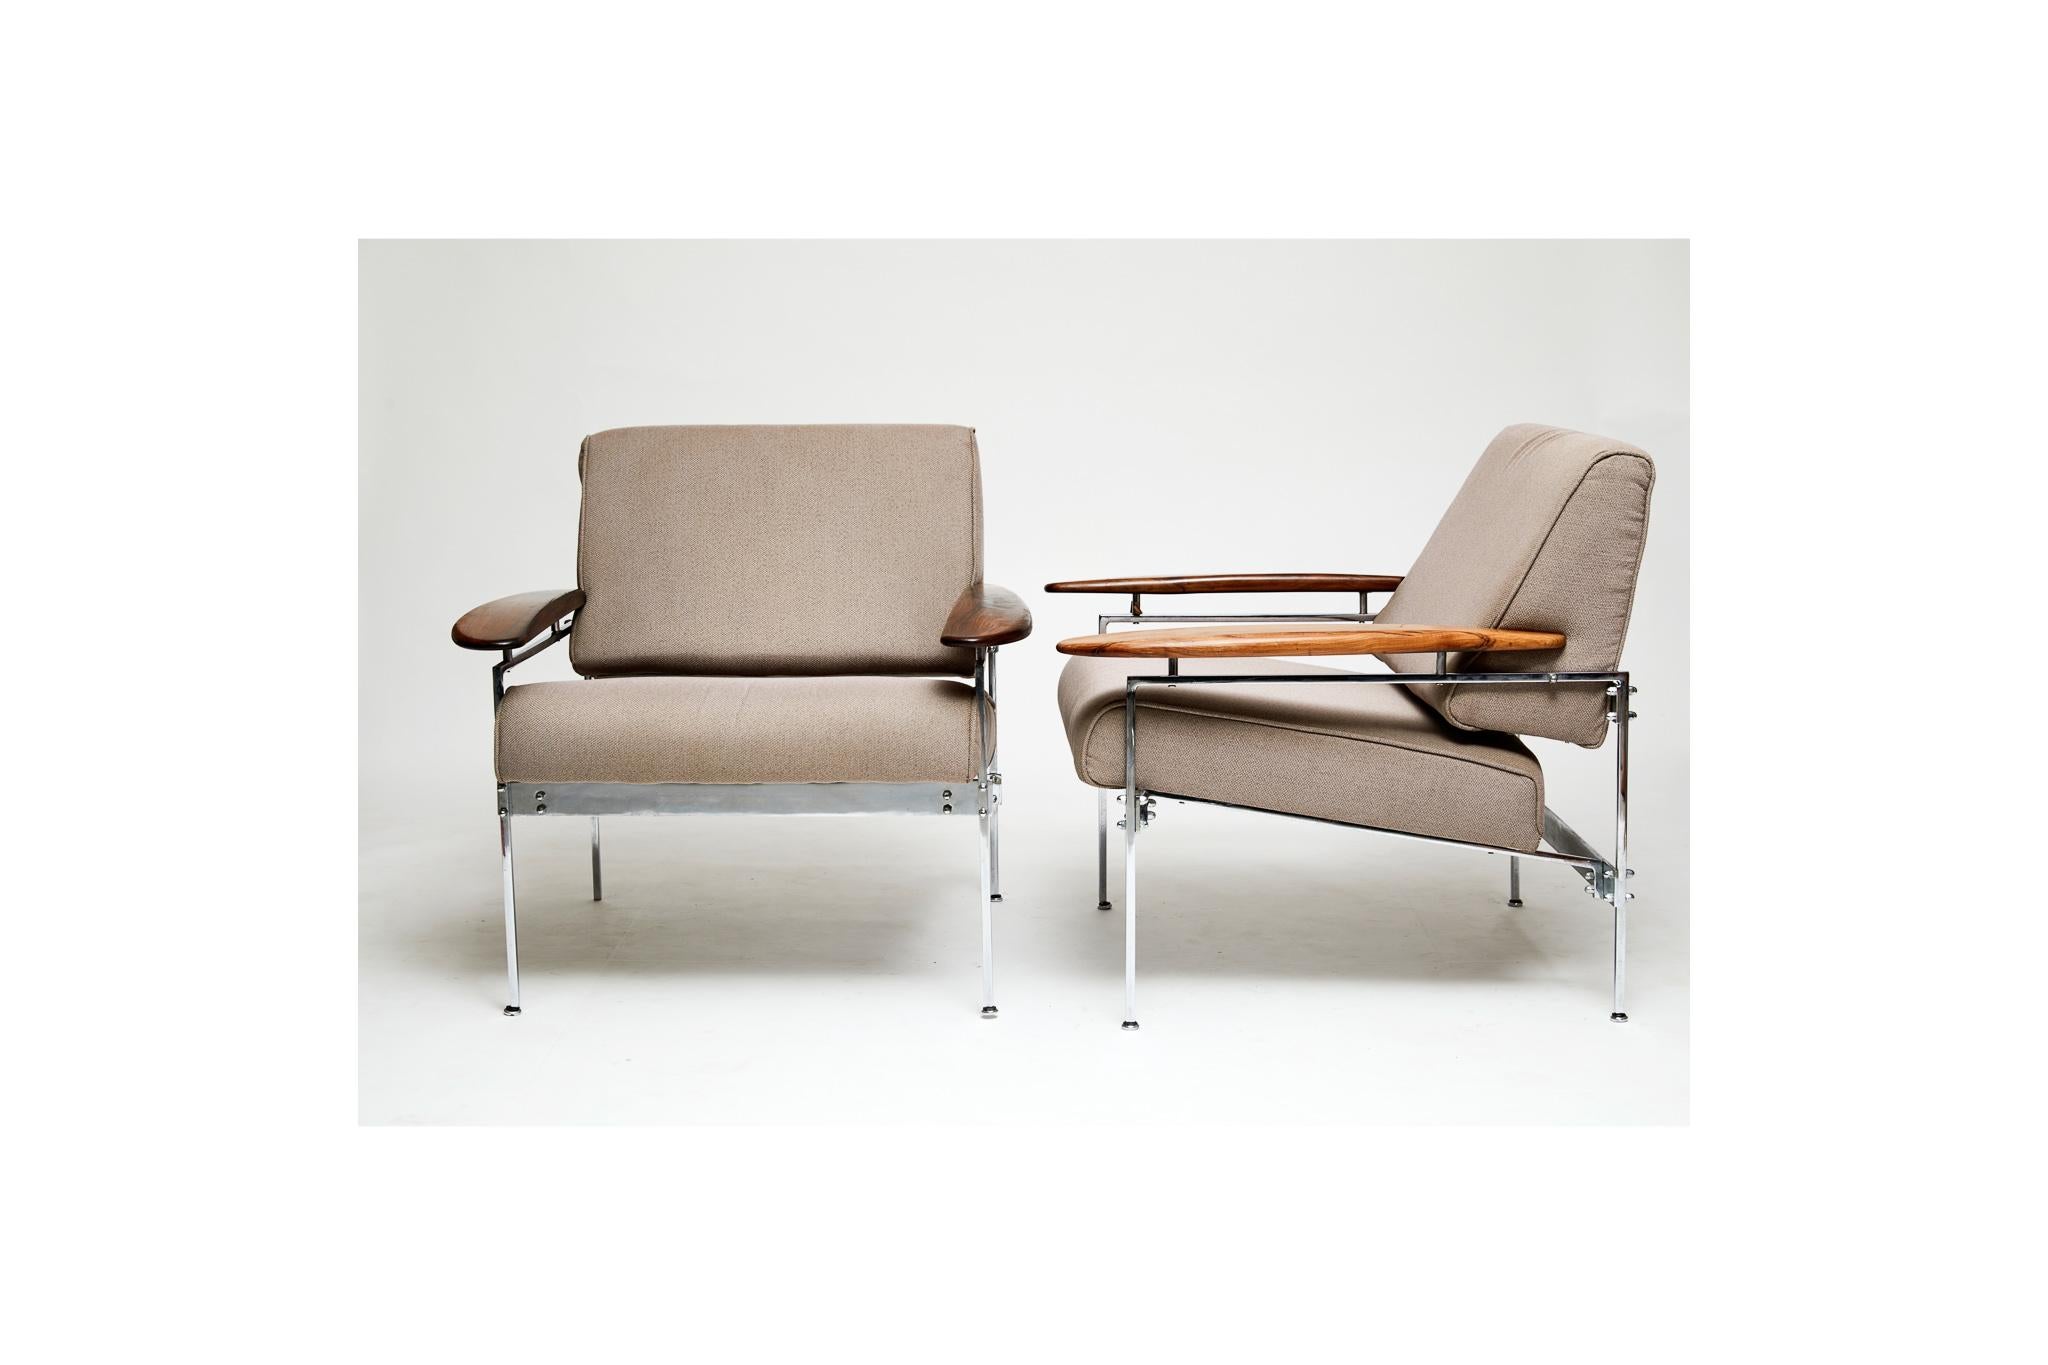 South American Brazilian Modern Armchairs in Chrome, Hardwood & Beige Fabric. Sergio Rodrigues